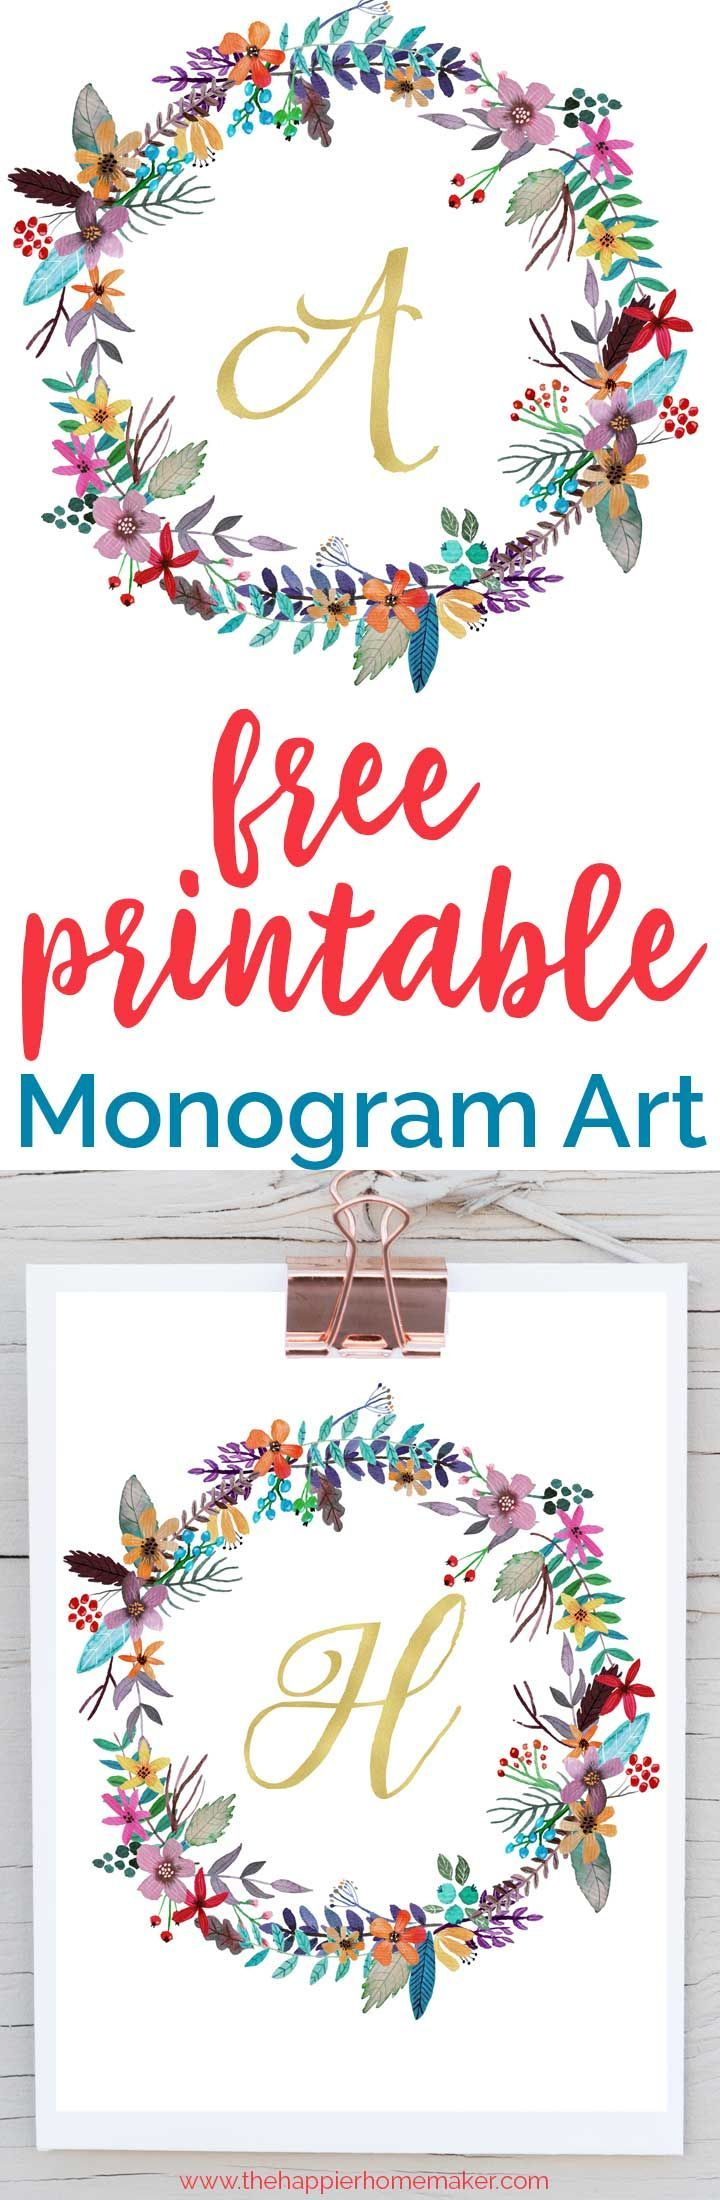 Free Printable Monogram Art | Free Printables | Pinterest | Free - Free Printable Monogram Letters